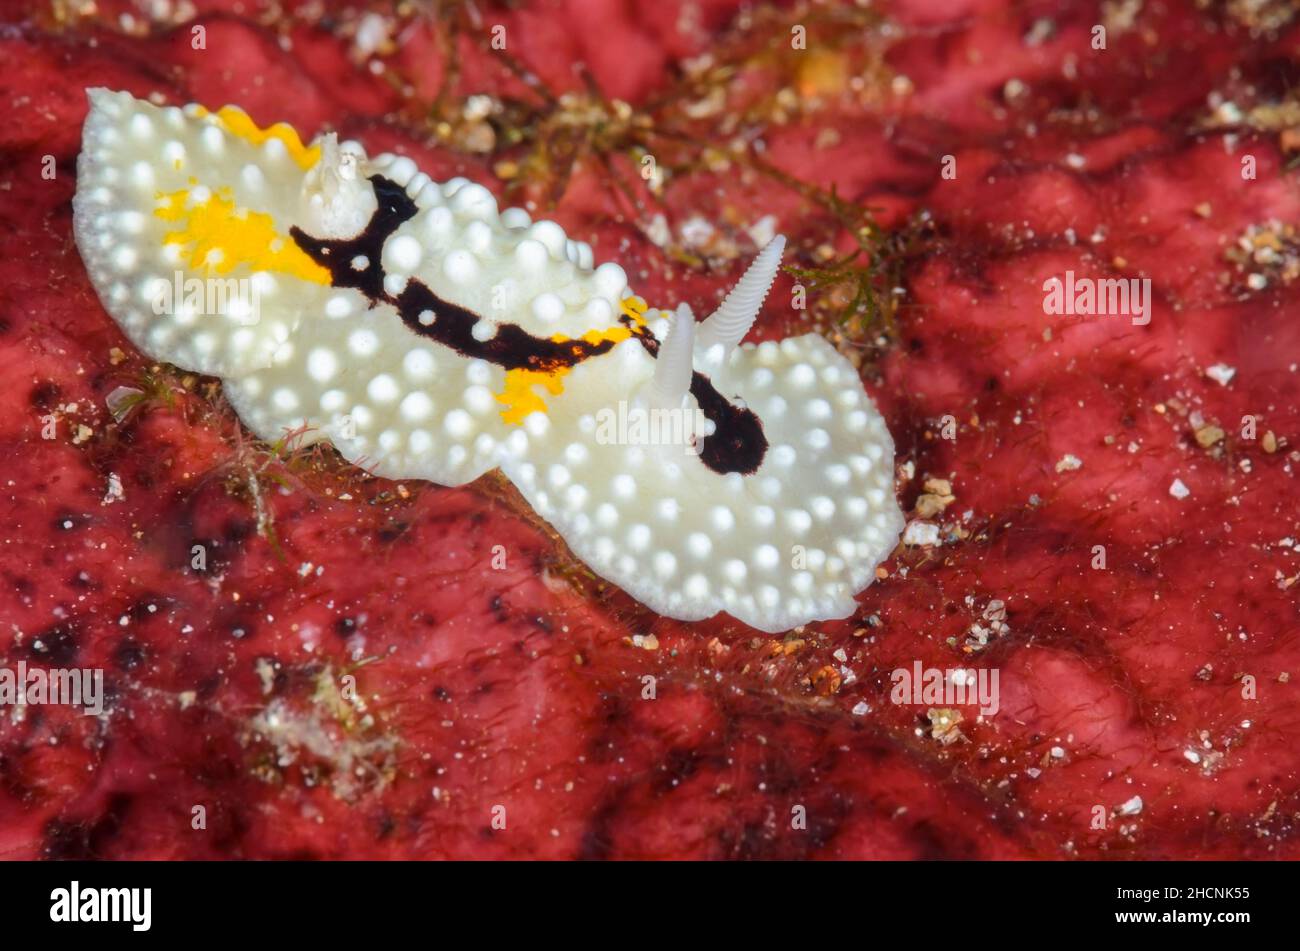 Sea slug or nudibranch, Aldisa albatrossae, Alor, Nusa Tenggara, Indonesia, Pacific Stock Photo